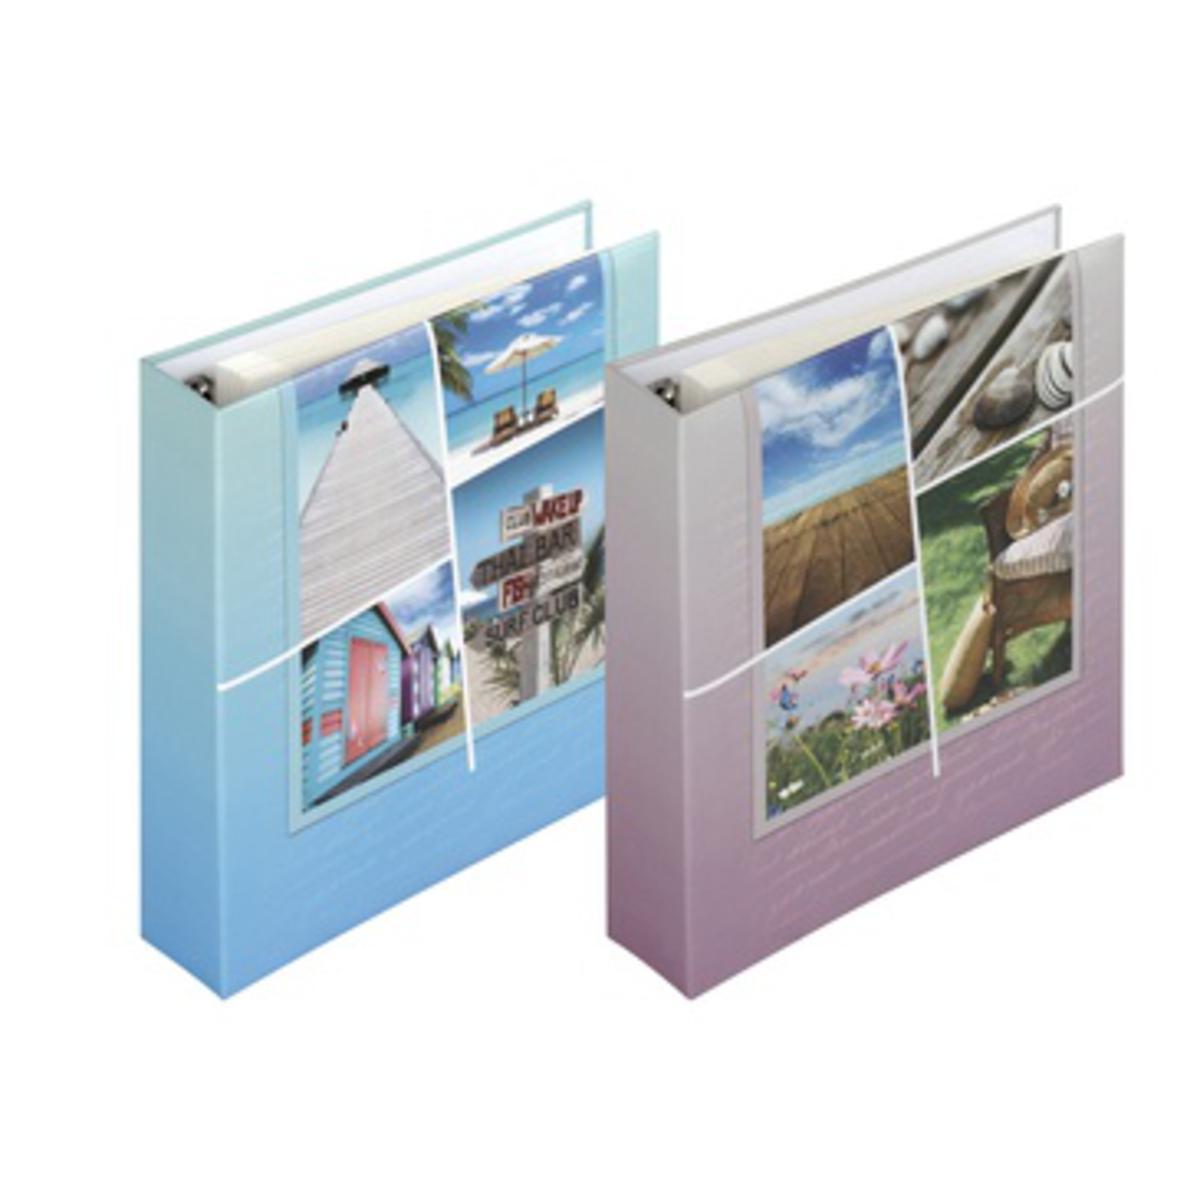 Album Calliope - 200 photos - 29,5 x 28 cm - Couverture carton - Polypropylène - Multicolore